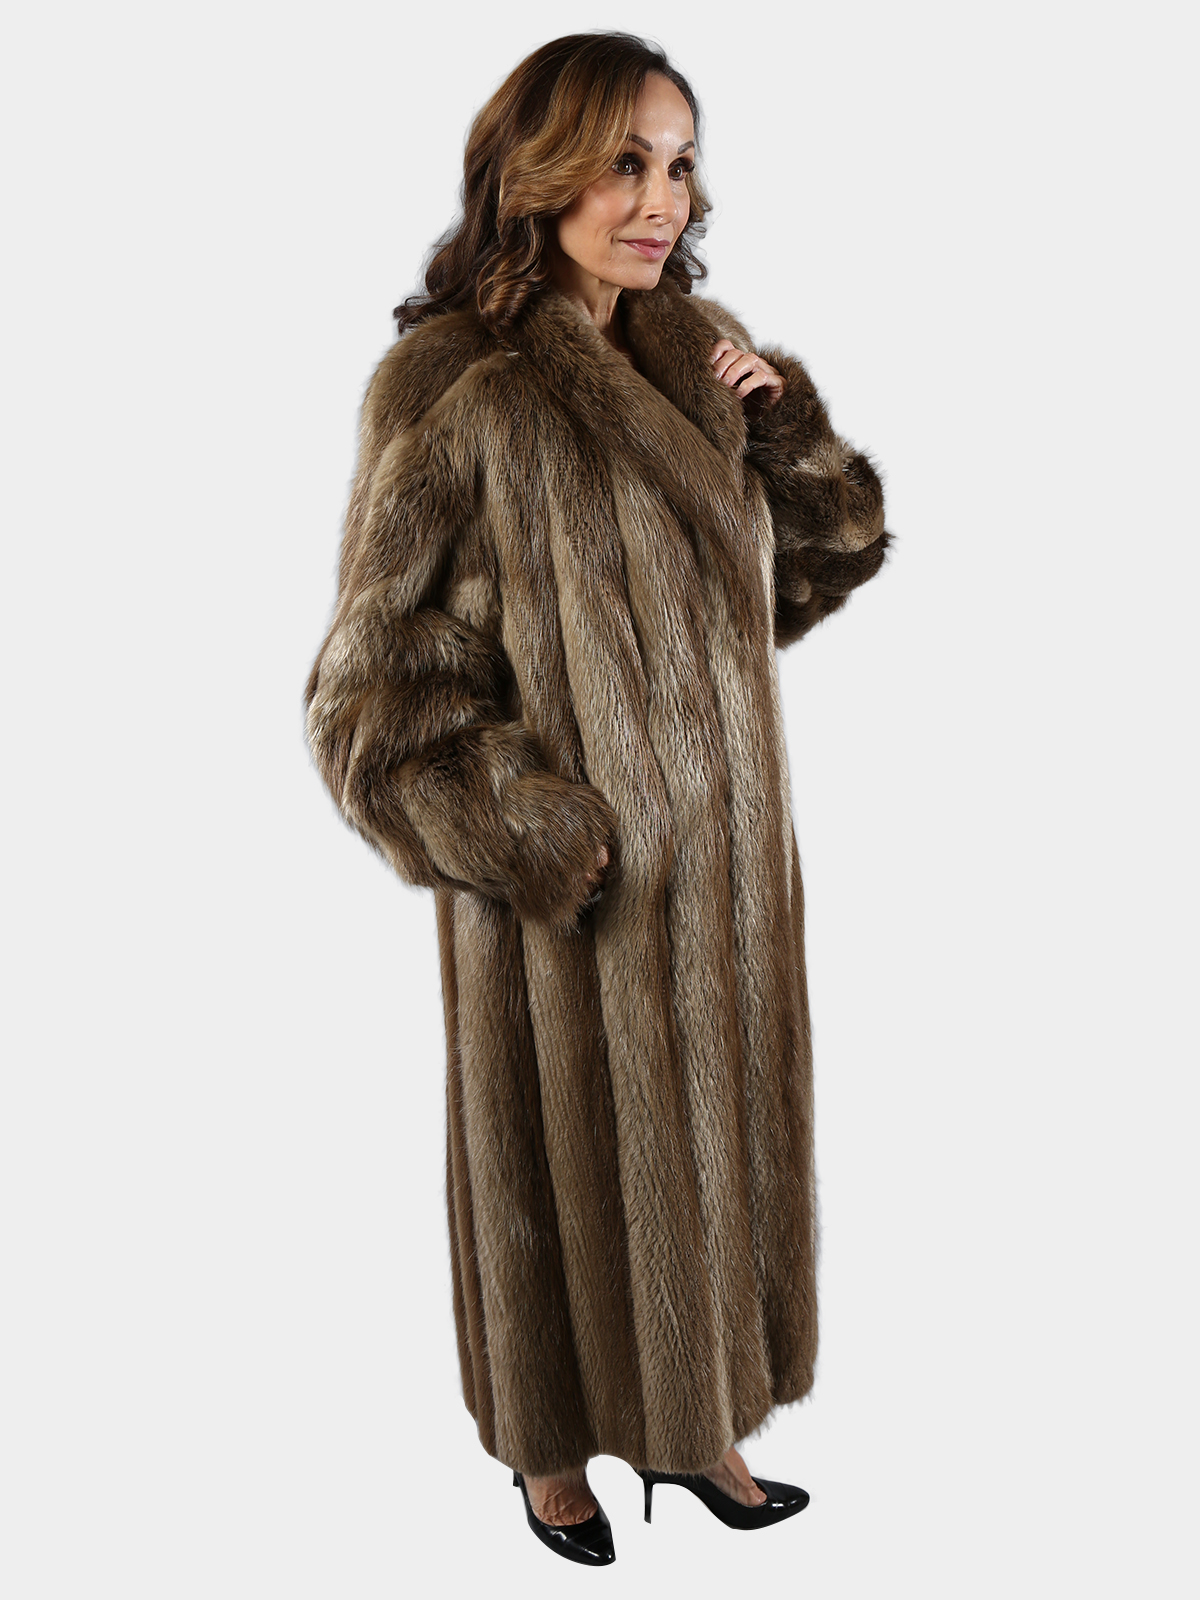 Blonde Long Hair Beaver Fur Coat (Women's Medium) - Estate Furs